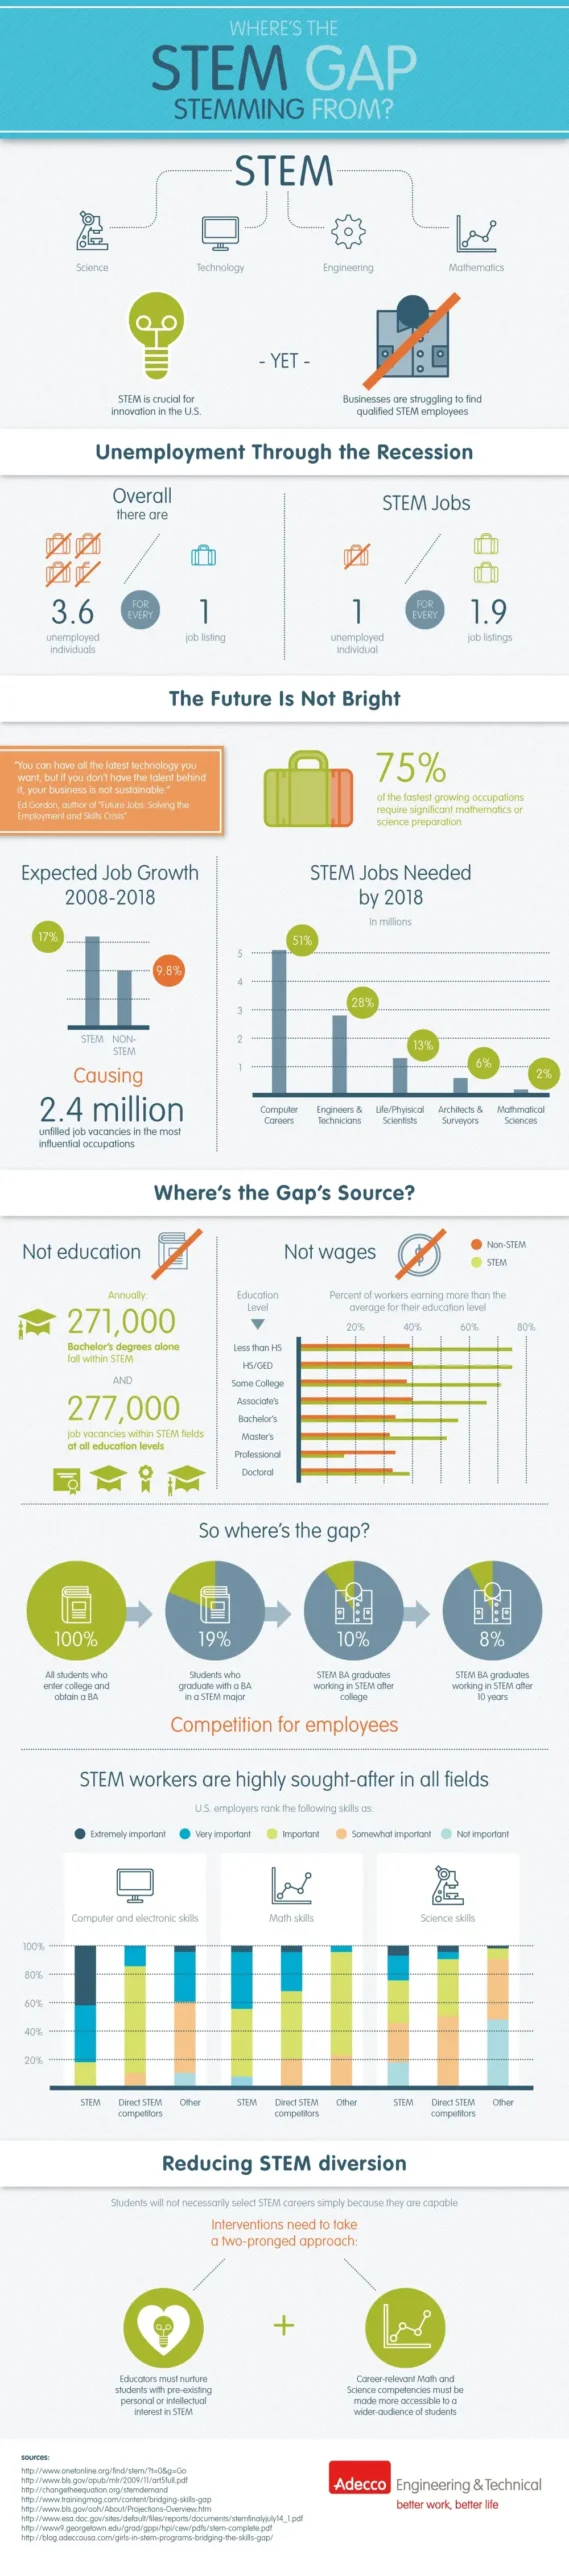 Wheres The STEM GAP [InfoGraphic]